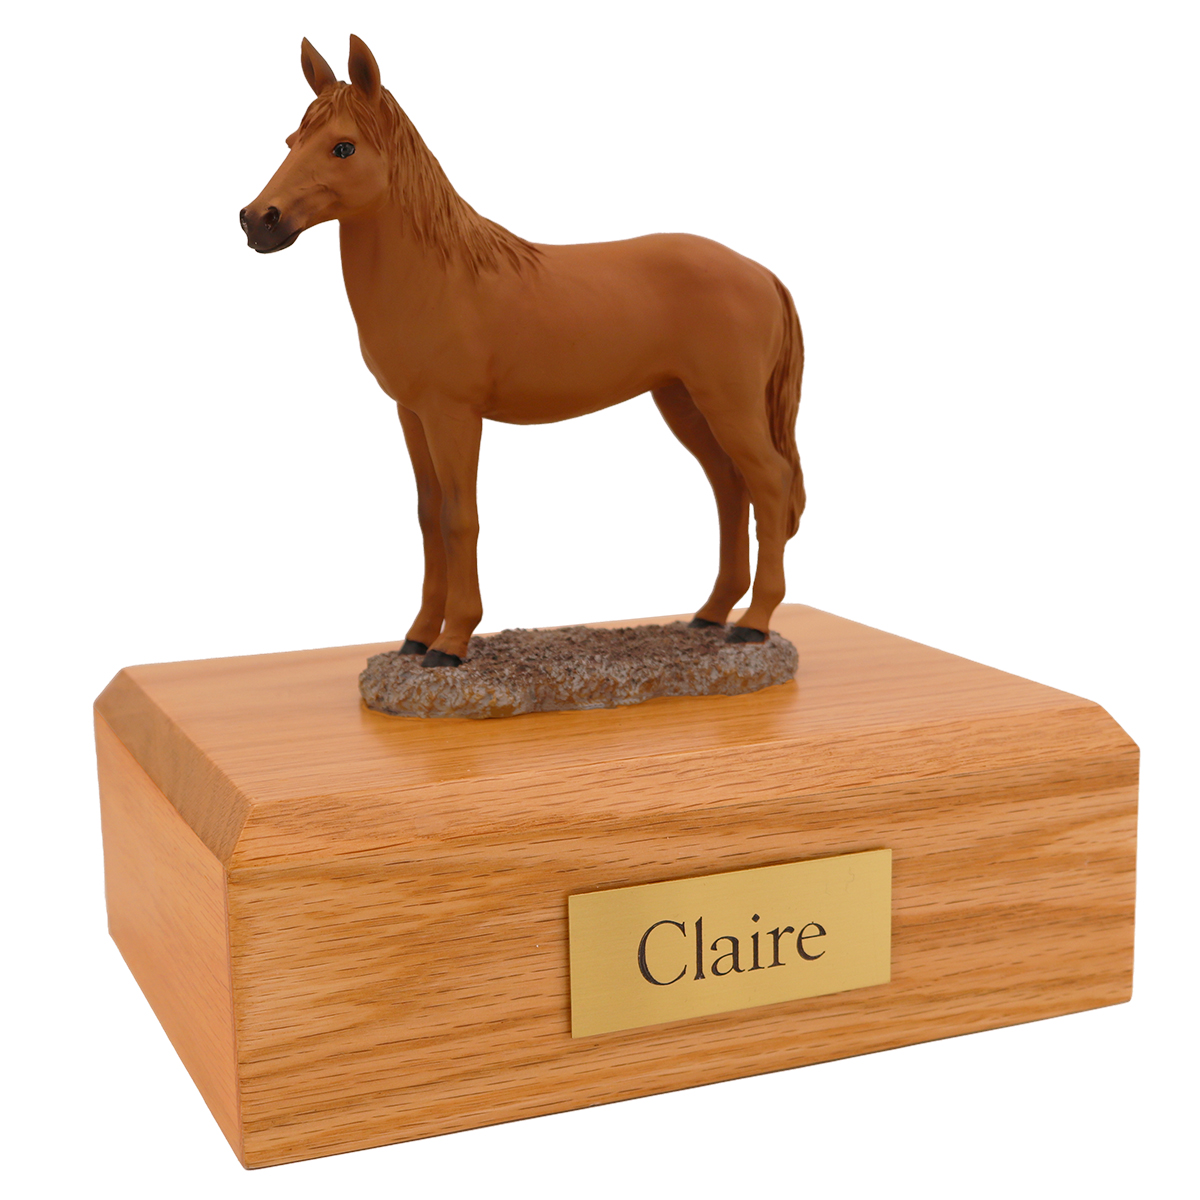 Horse, Chesnut, Standing - Figurine Urn